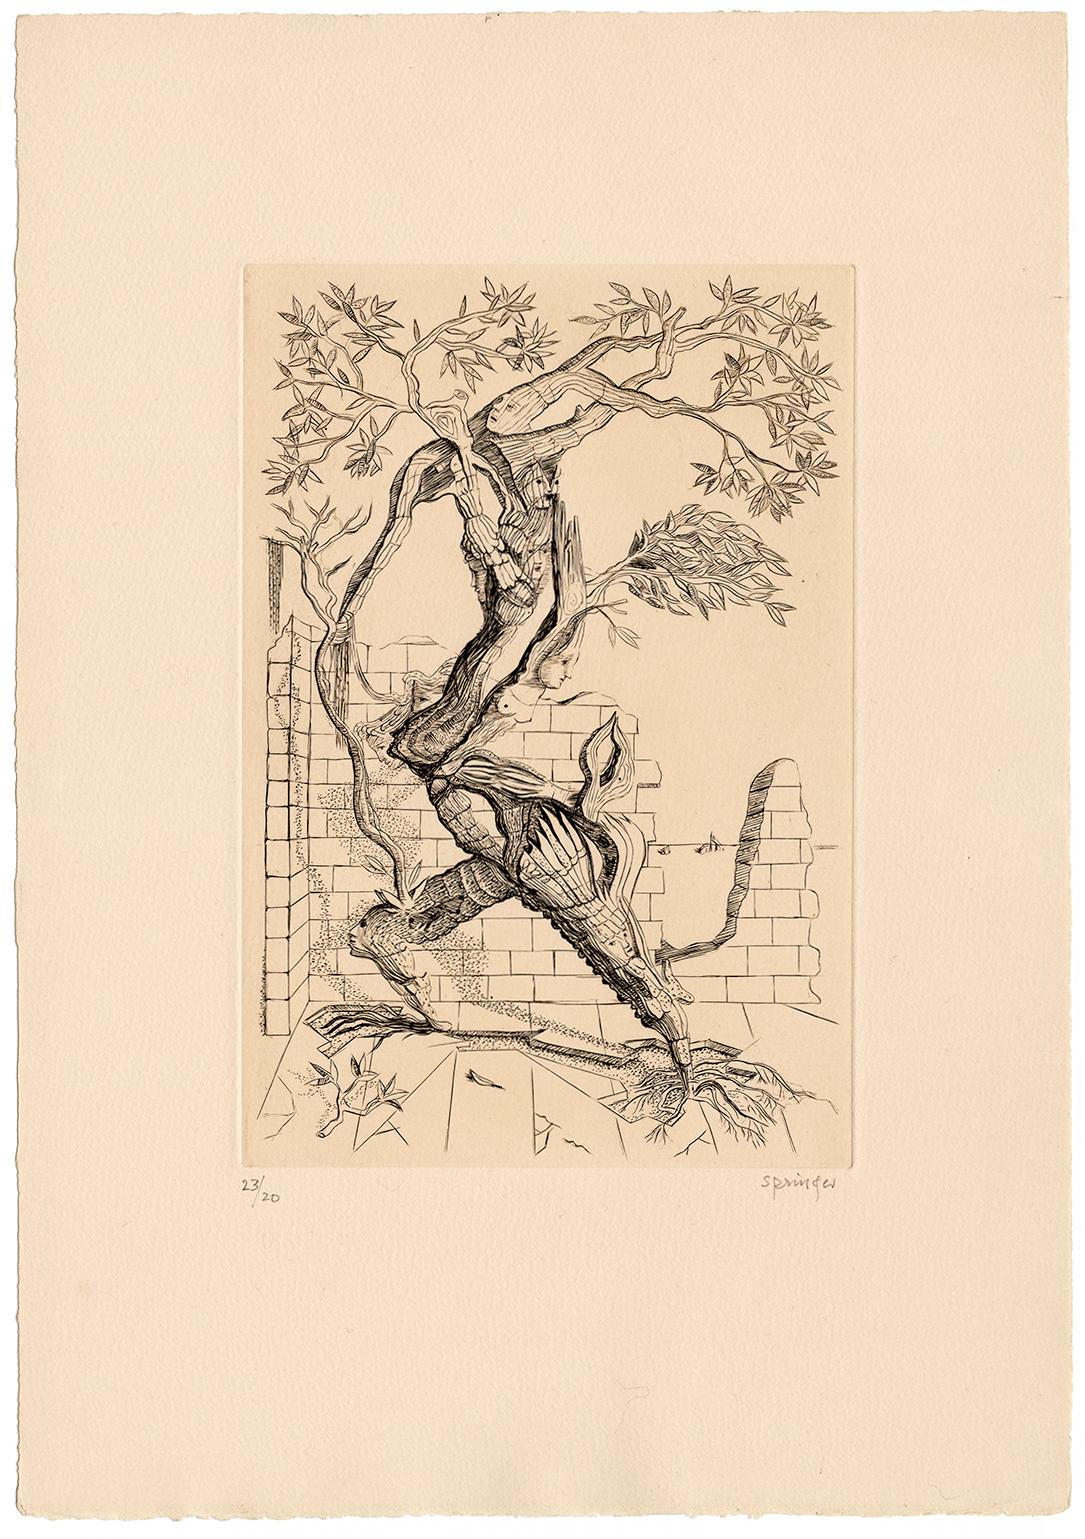 Arbre-Homme (Tree-Man) —Mid-Century Surrealism - Print by Ferdinand Springer